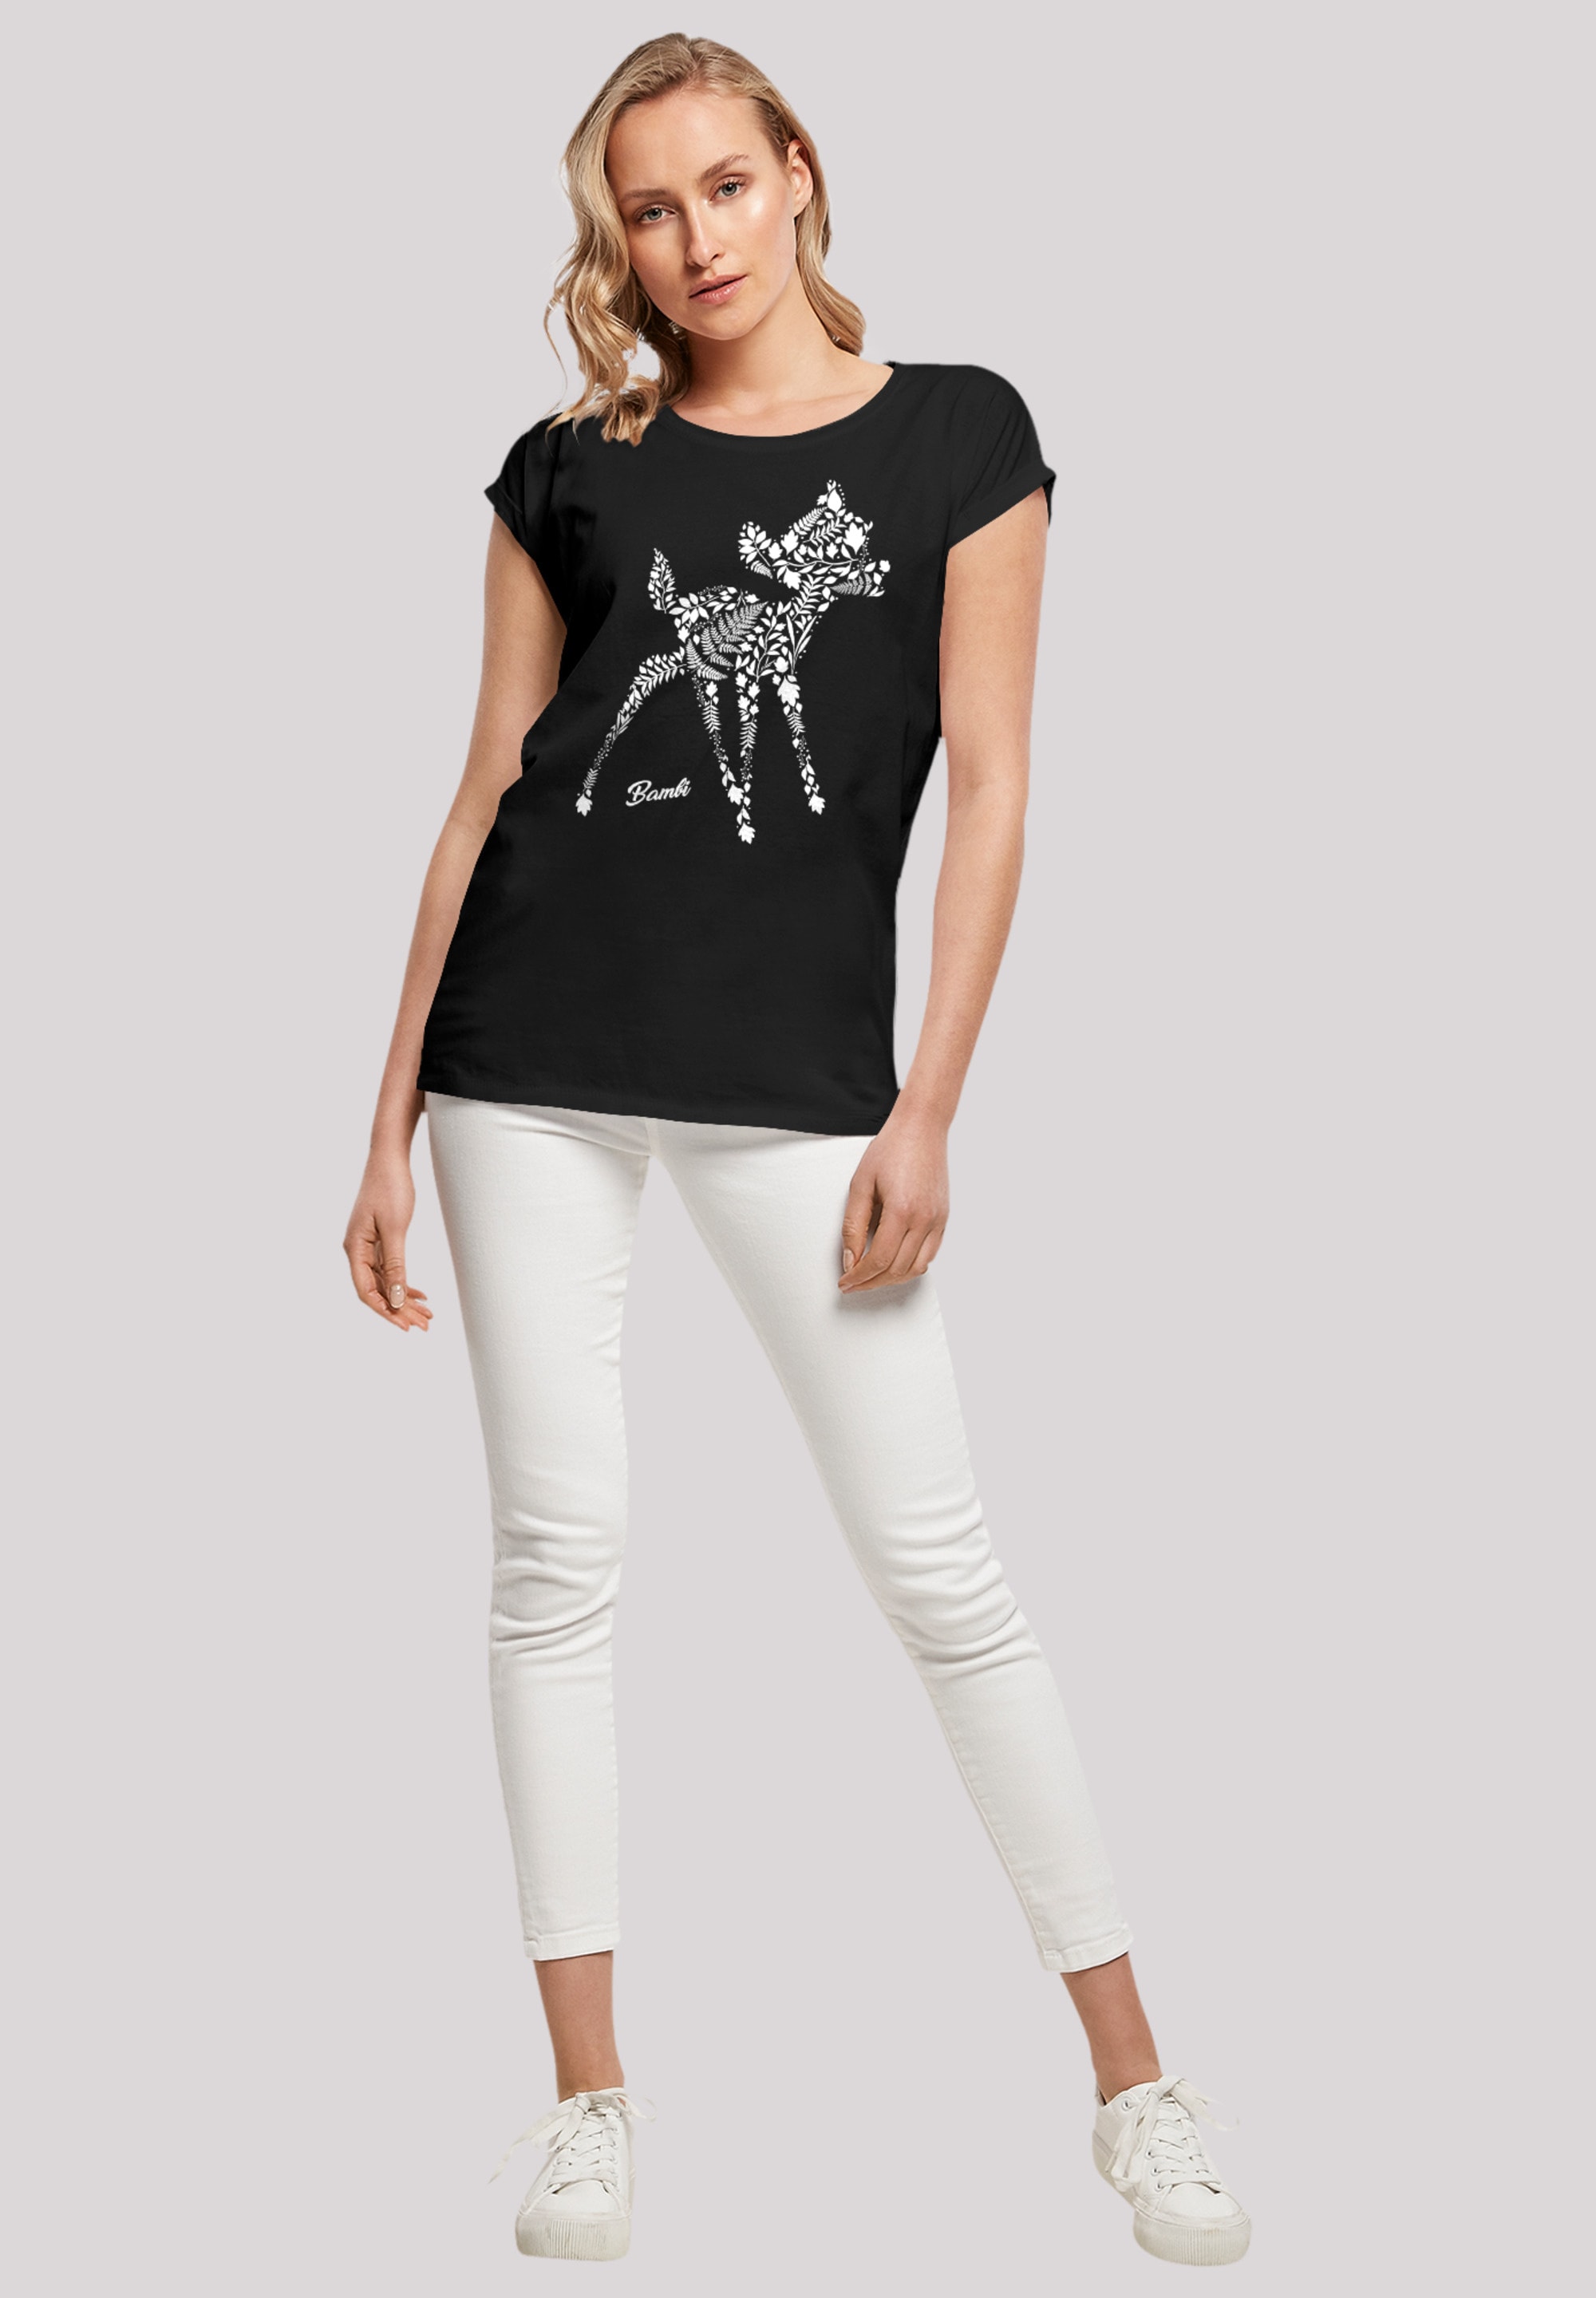 Bambi »Disney Qualität Premium T-Shirt kaufen | walking I\'m Botanica«, F4NT4STIC online